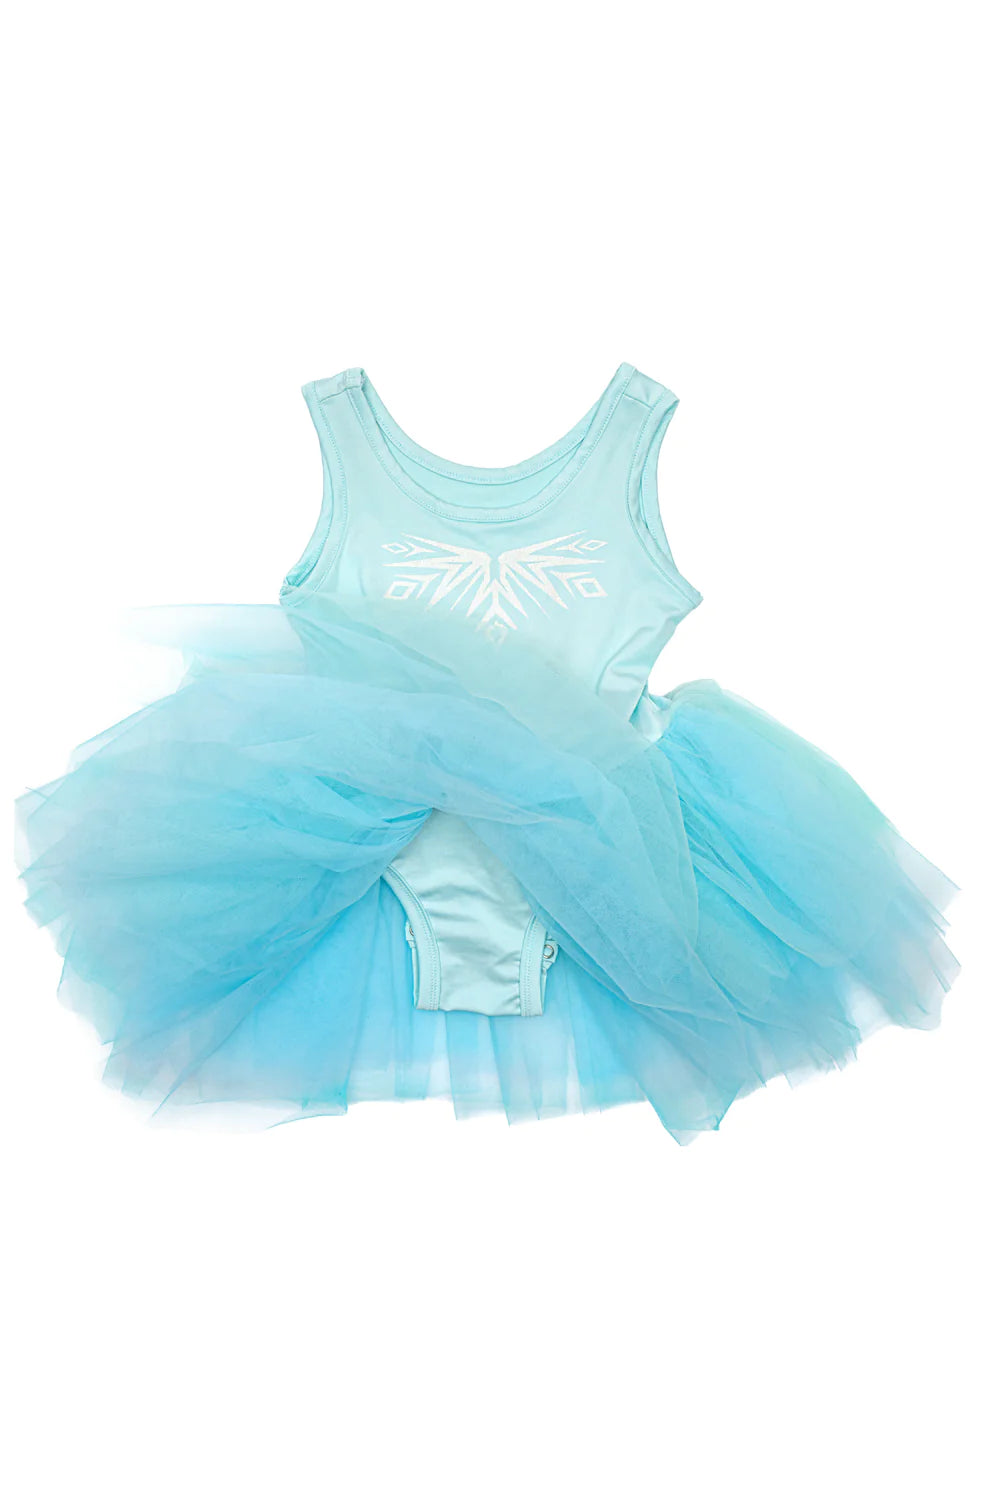 Elsa Ballet Tutu Dress - LT Blue